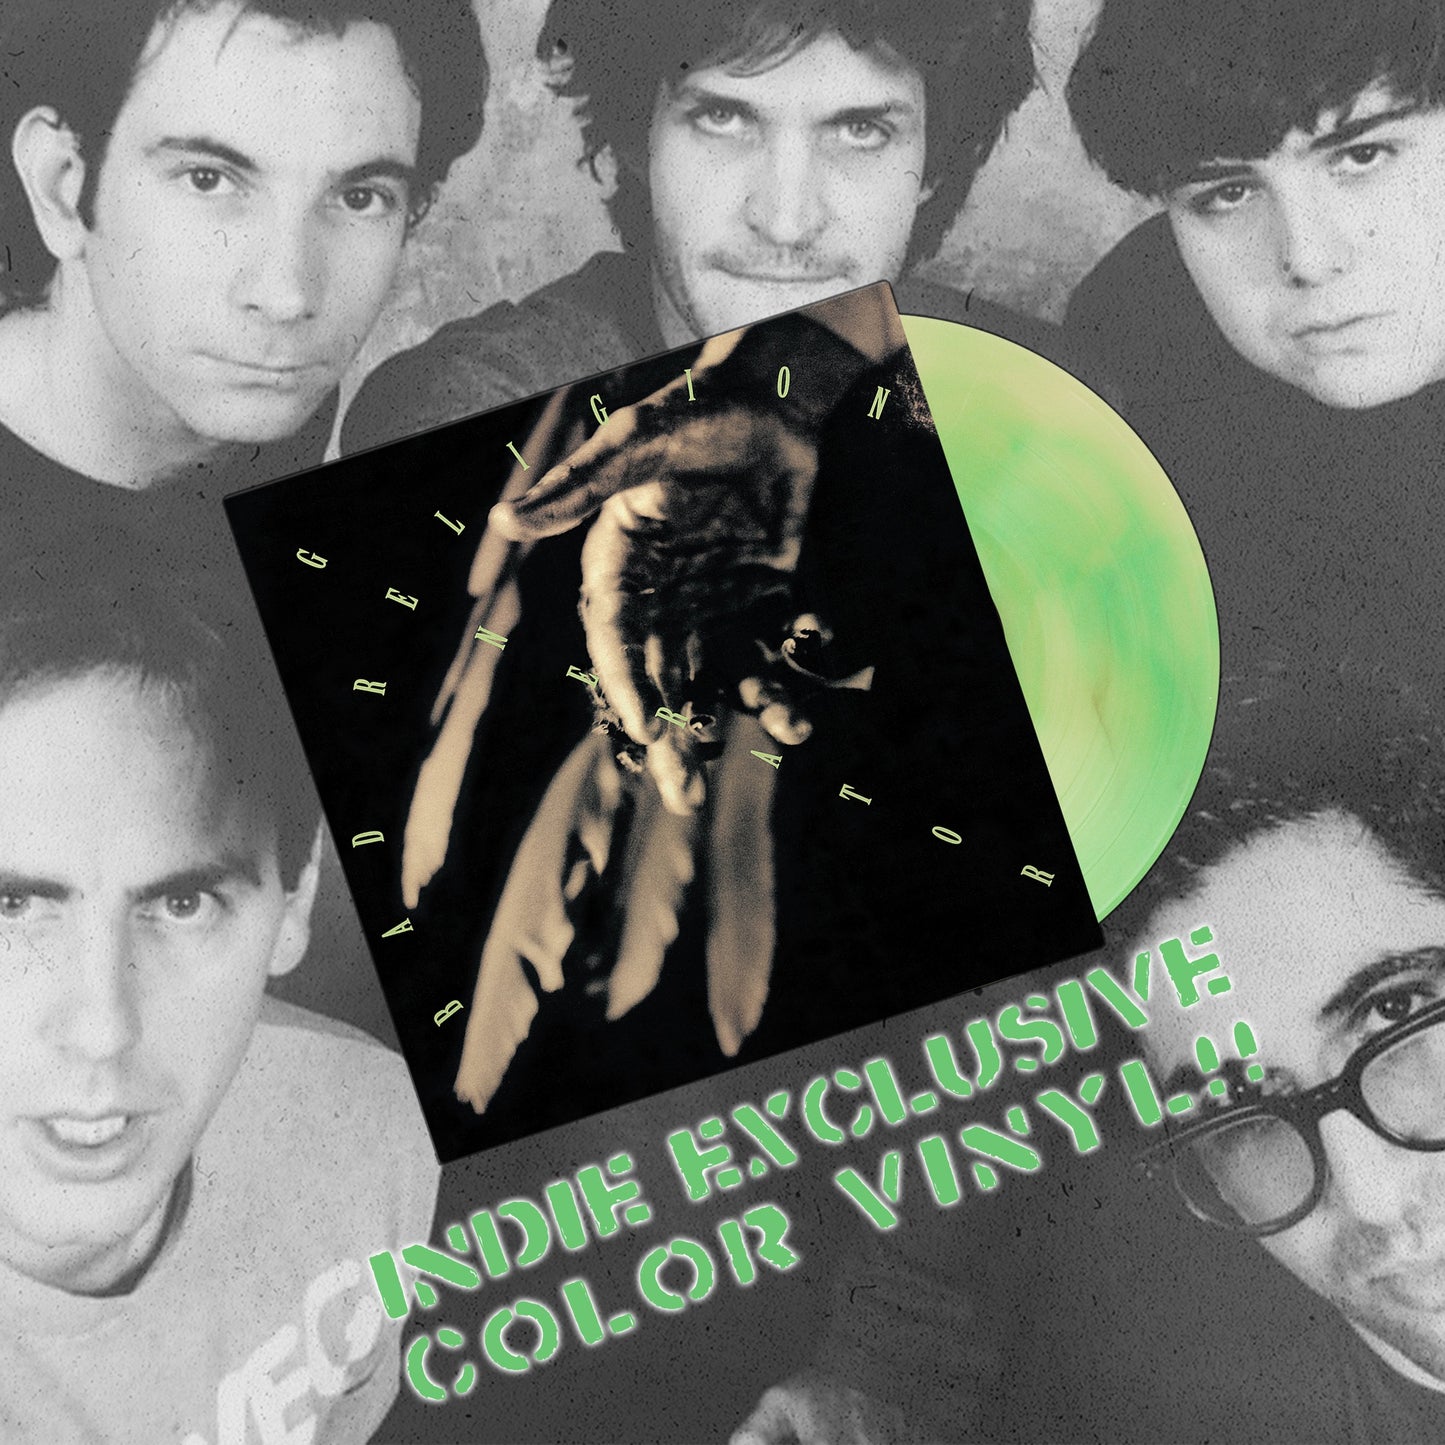 Bad Religion "Generator" LP (Green and Clear galaxy vinyl)